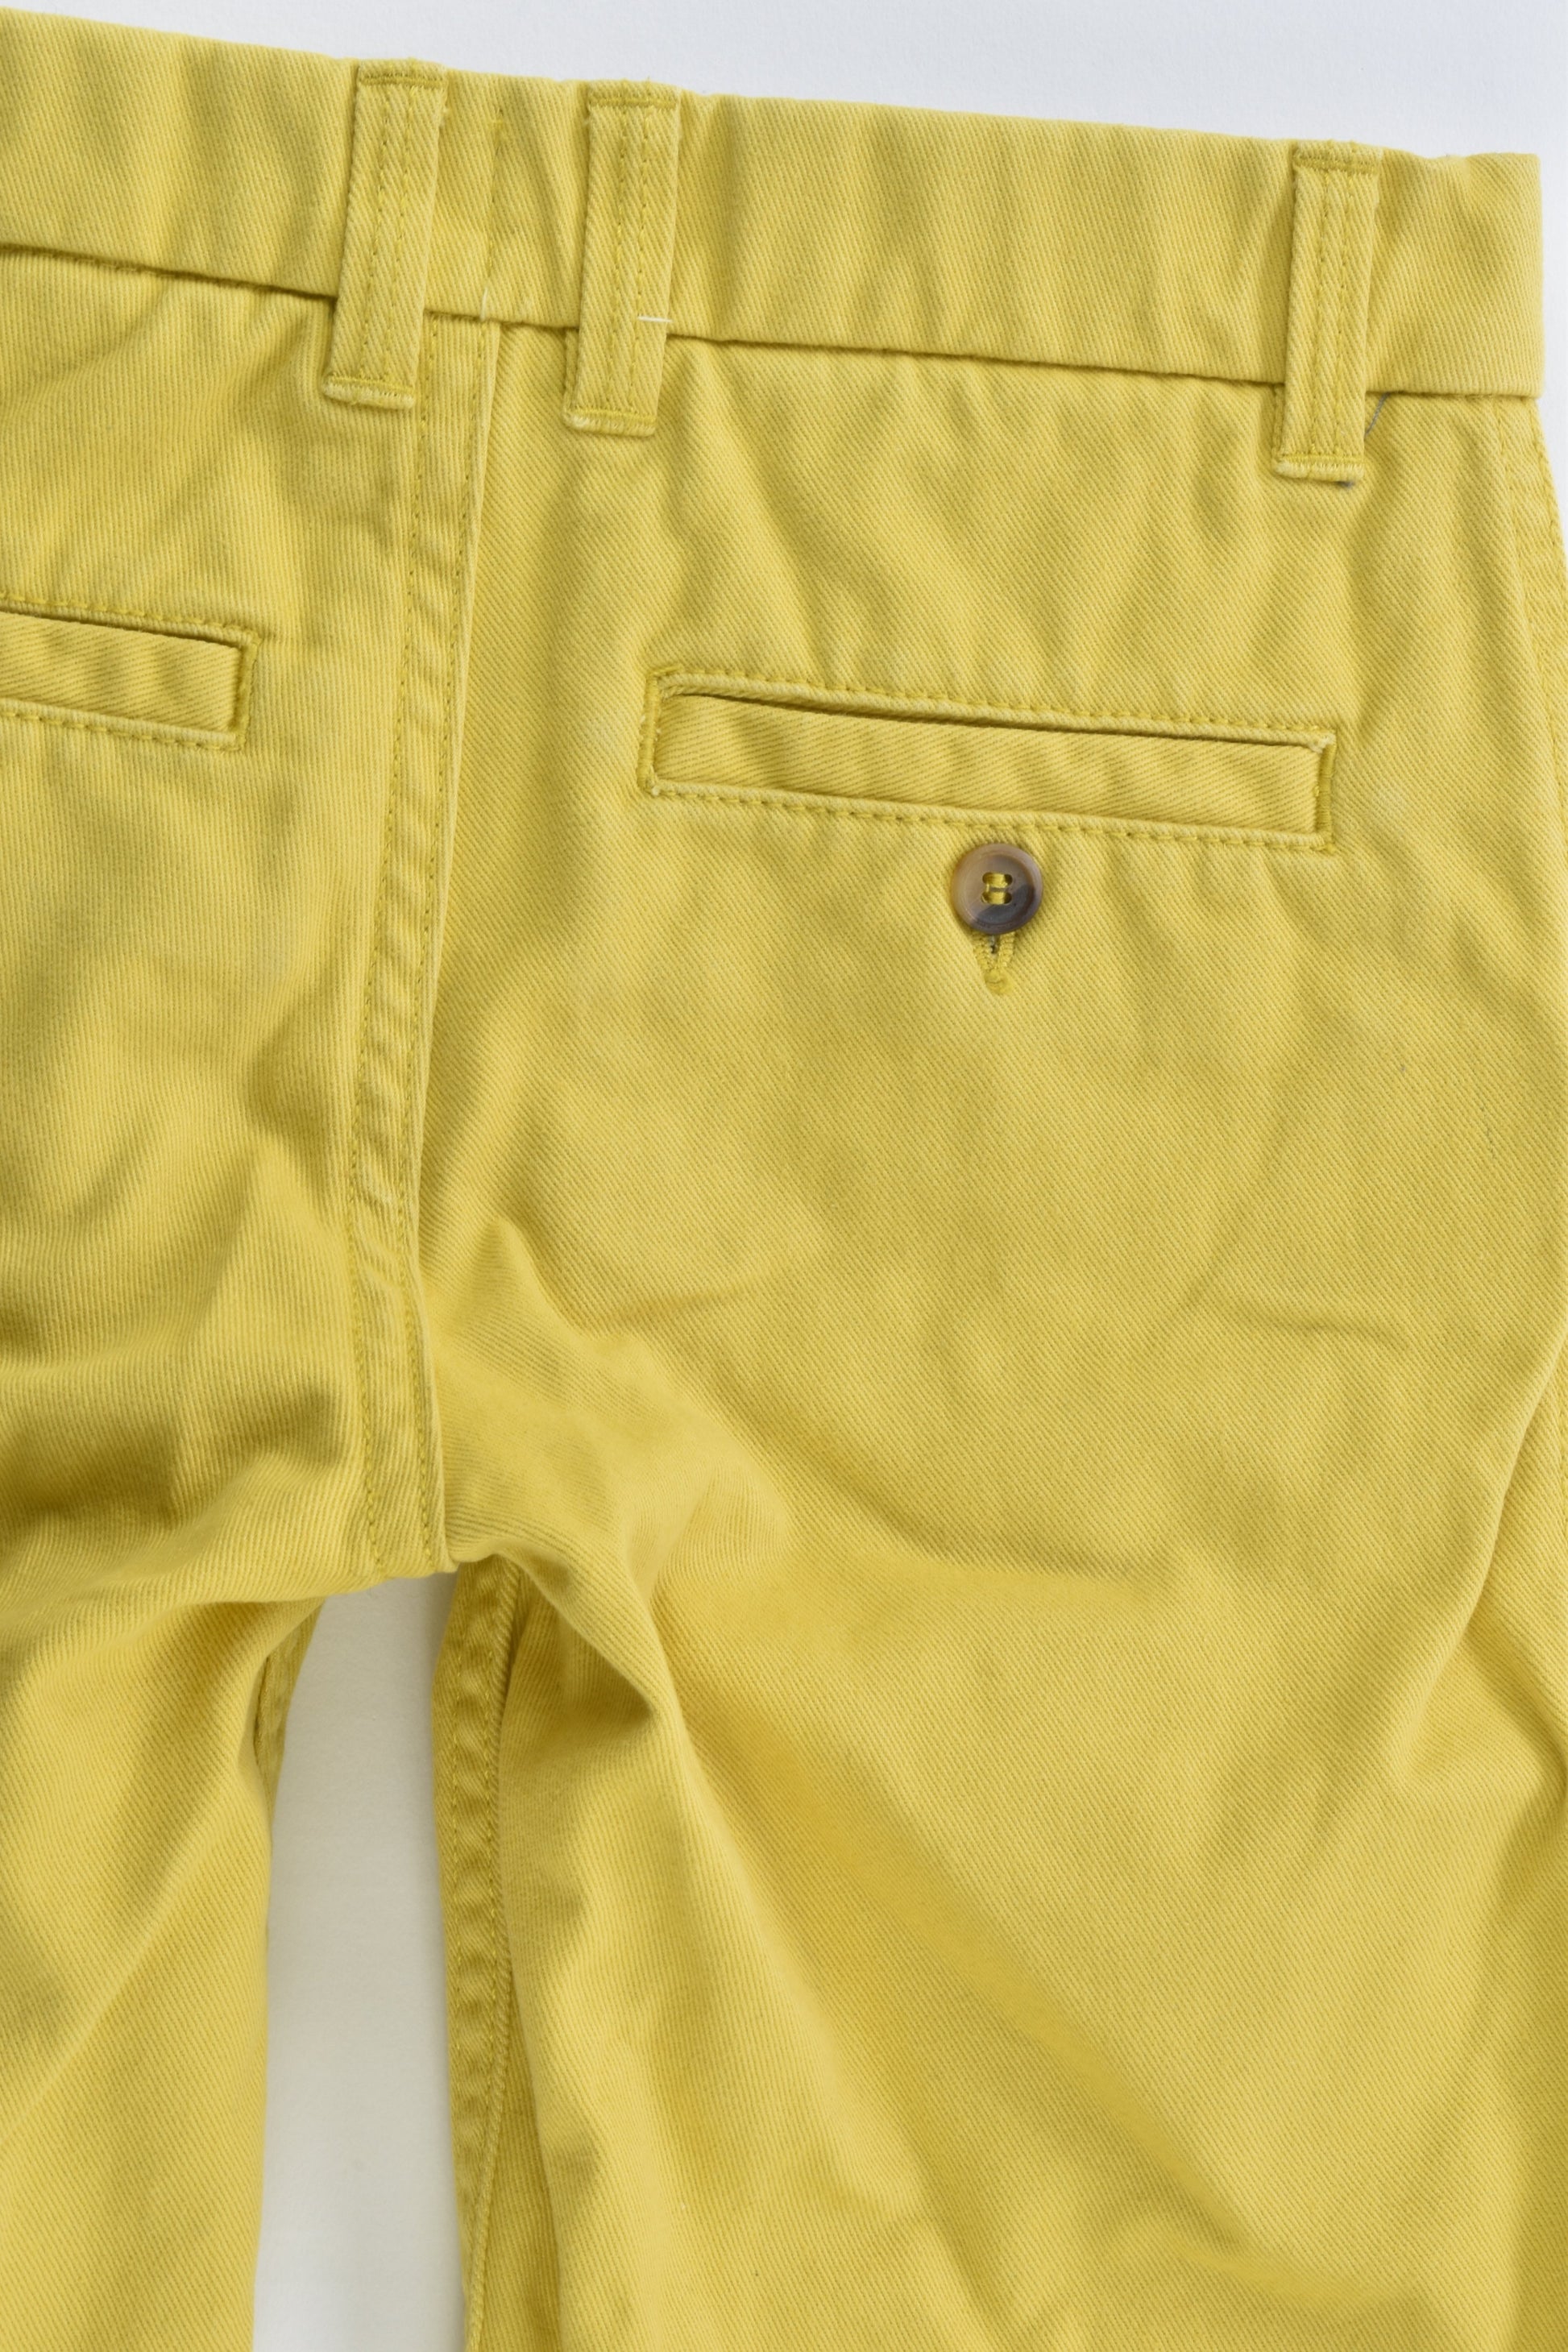 Mini Club Size 4-5 (104-110 cm) Shorts